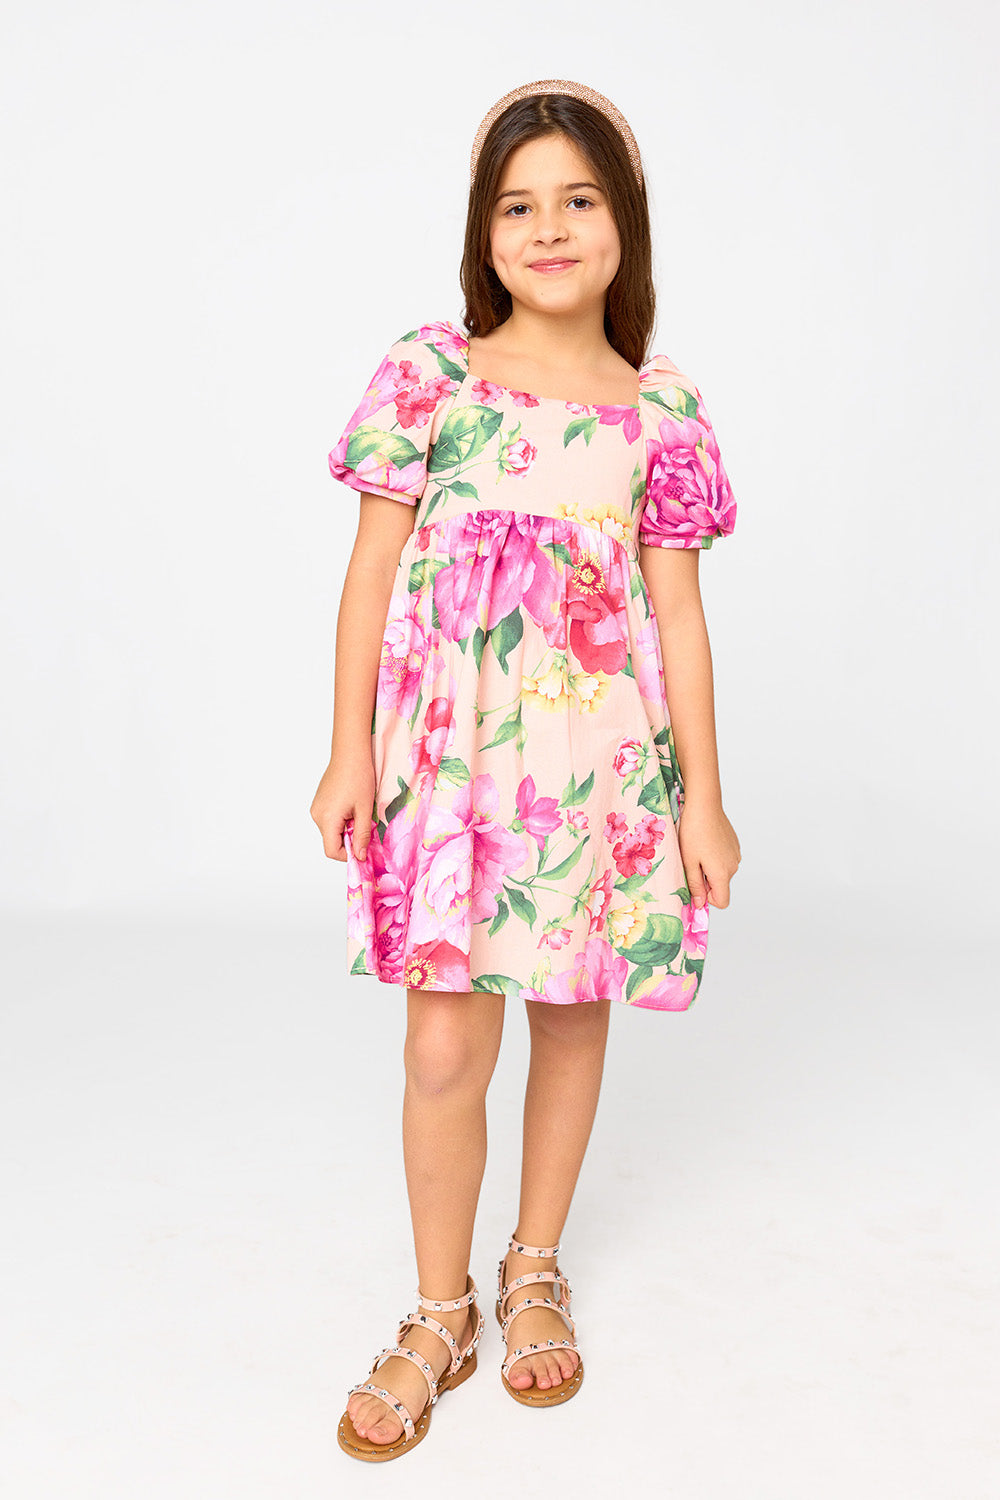 BuddyLove Kennedy Girl's Baby Doll Dress - Explorer